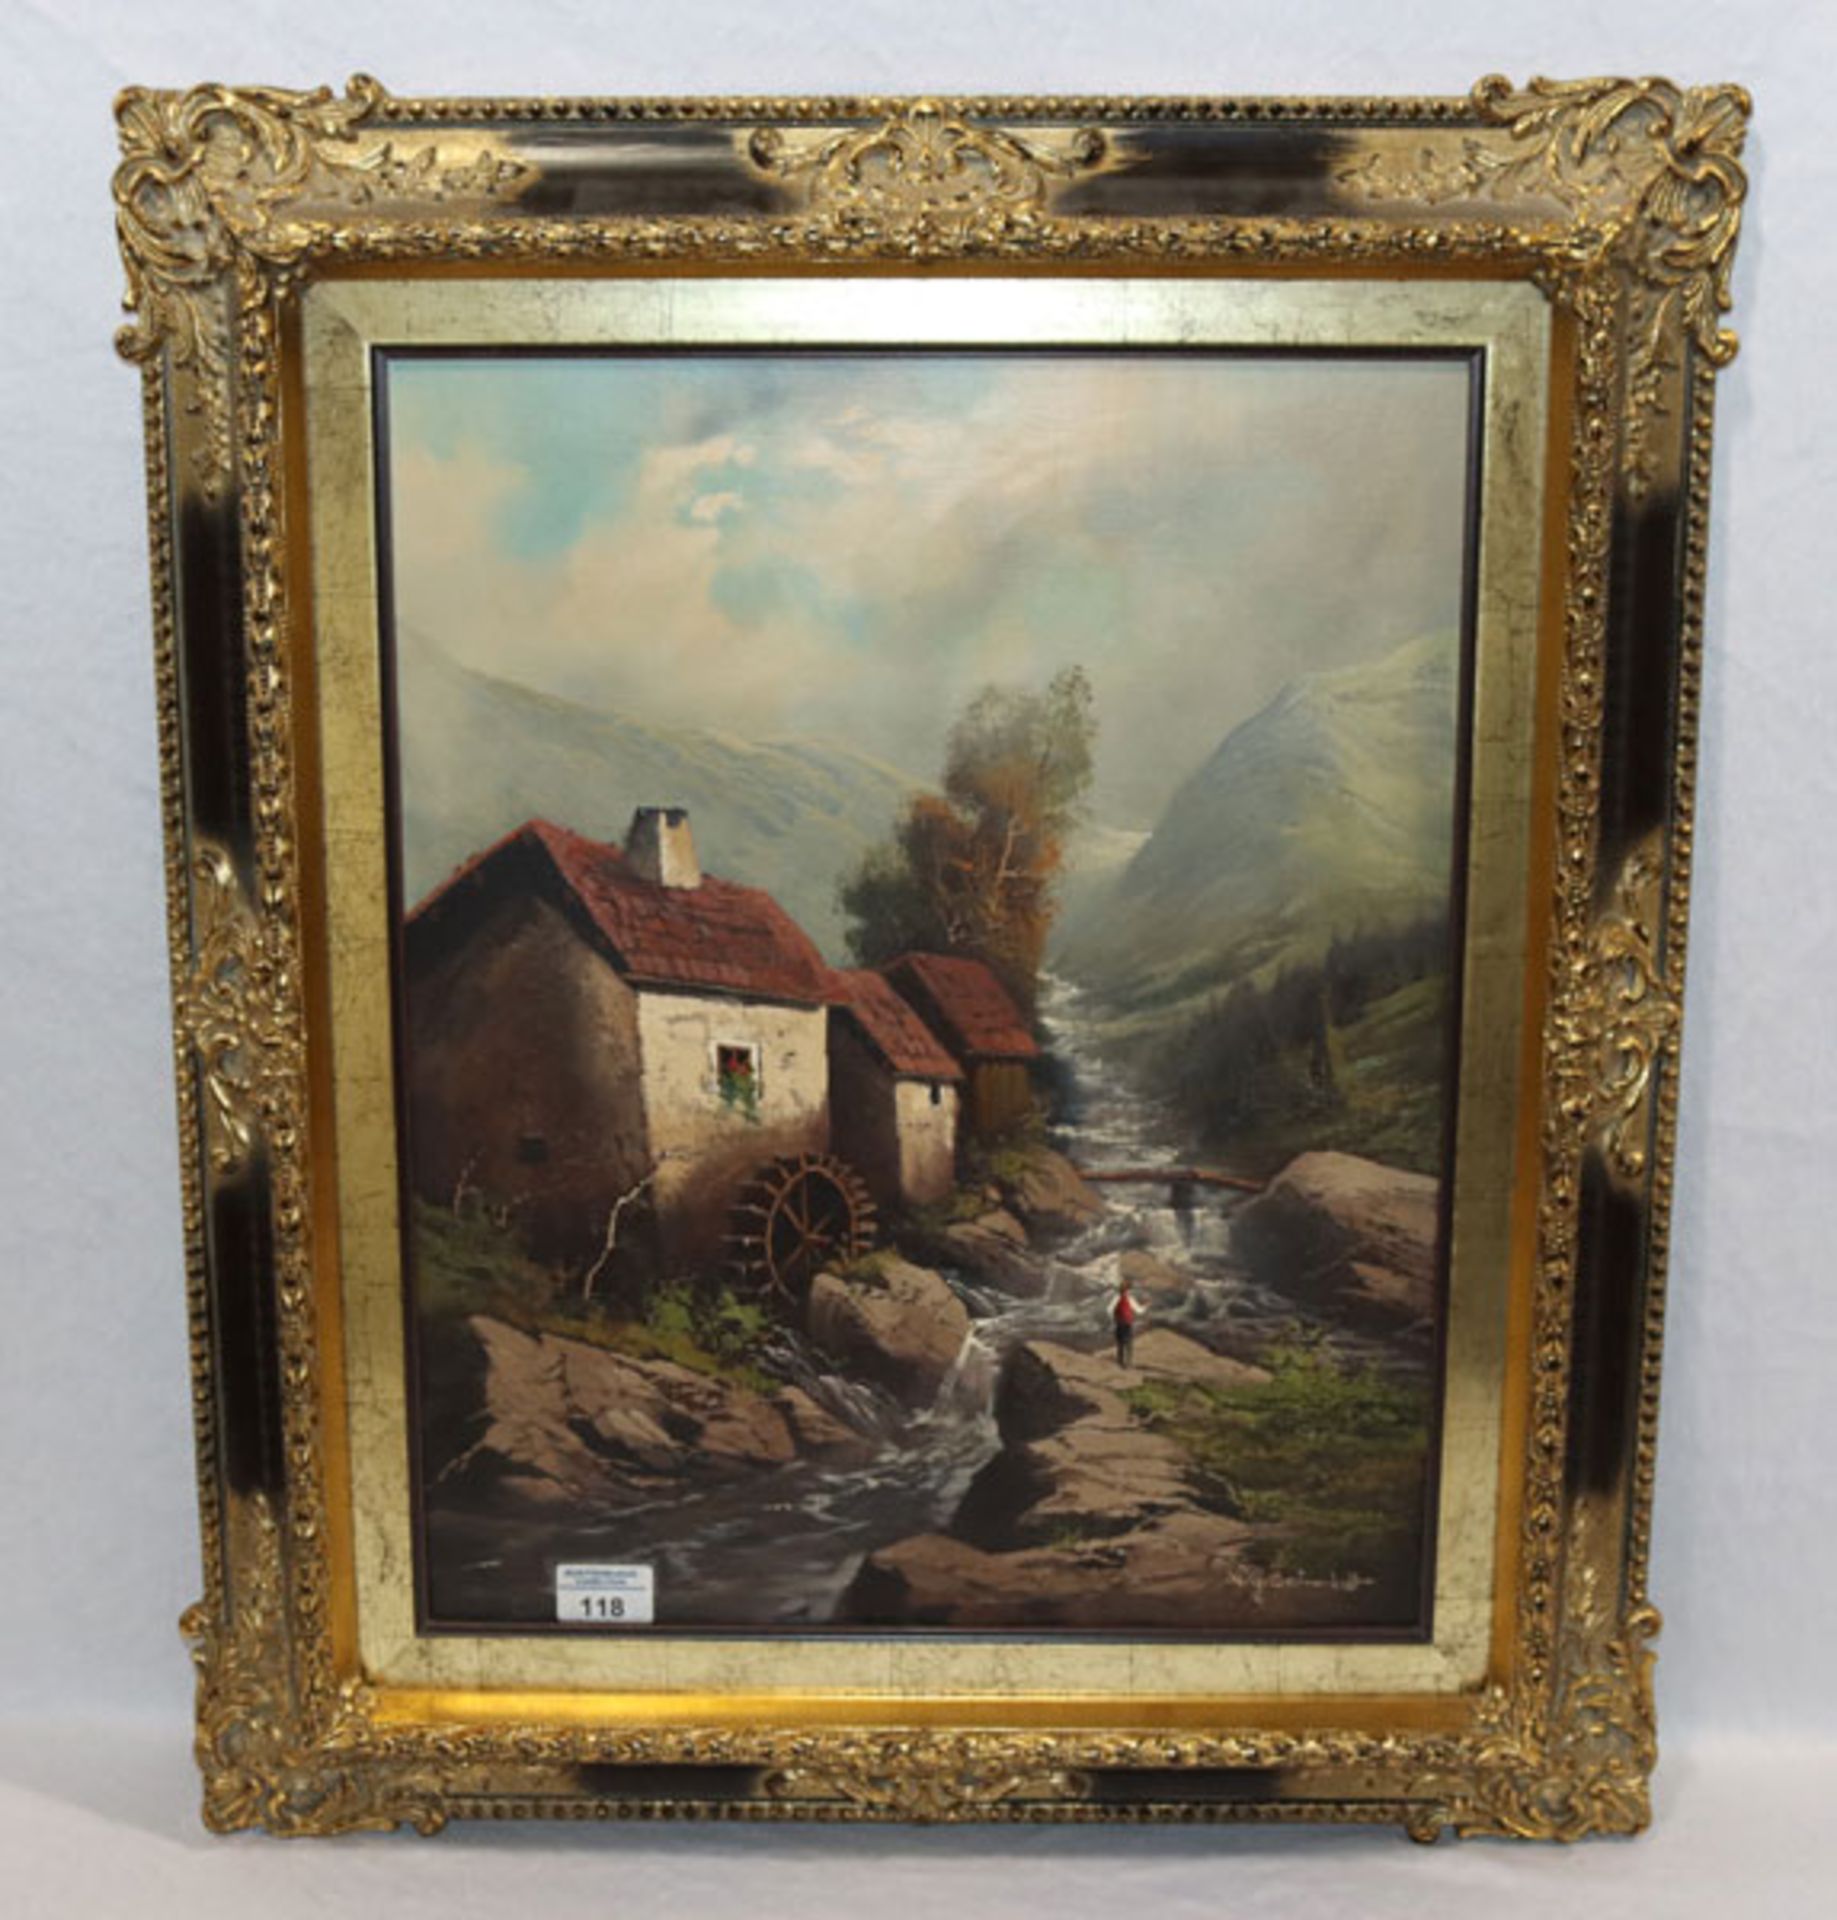 Gemälde ÖL/LW 'Mühle am Bachlauf', signiert N. G. Schmidt, dekorativ gerahmt, incl. Rahmen 68 cm x